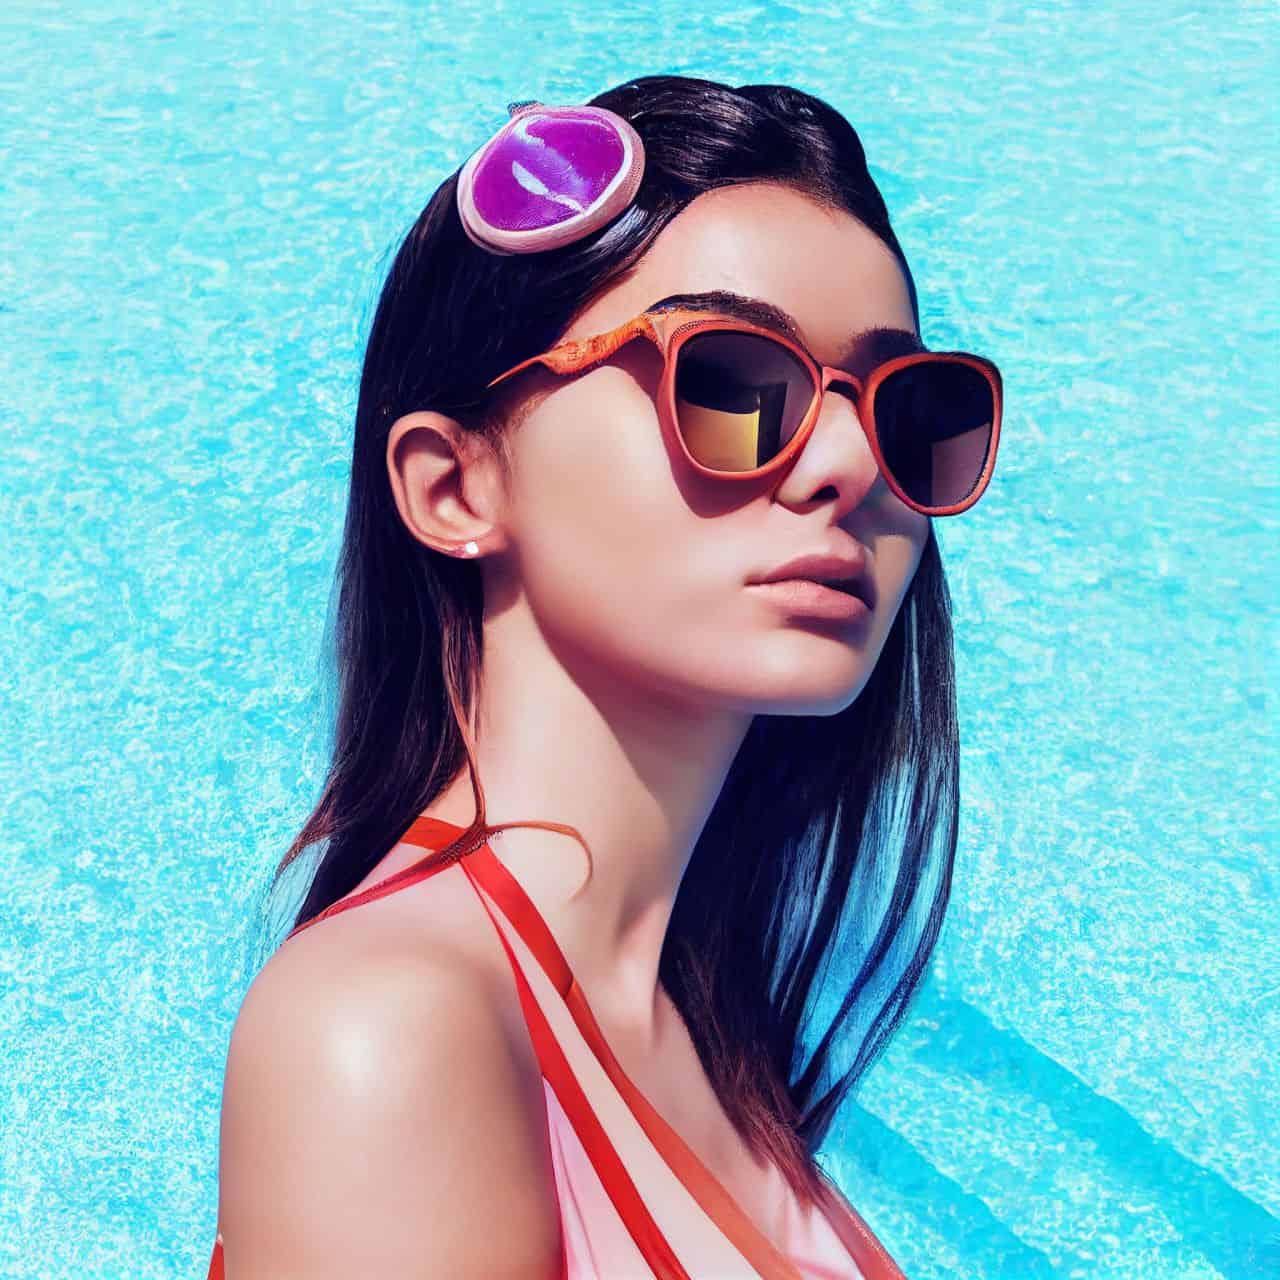 instagram model posing near a swimming pool